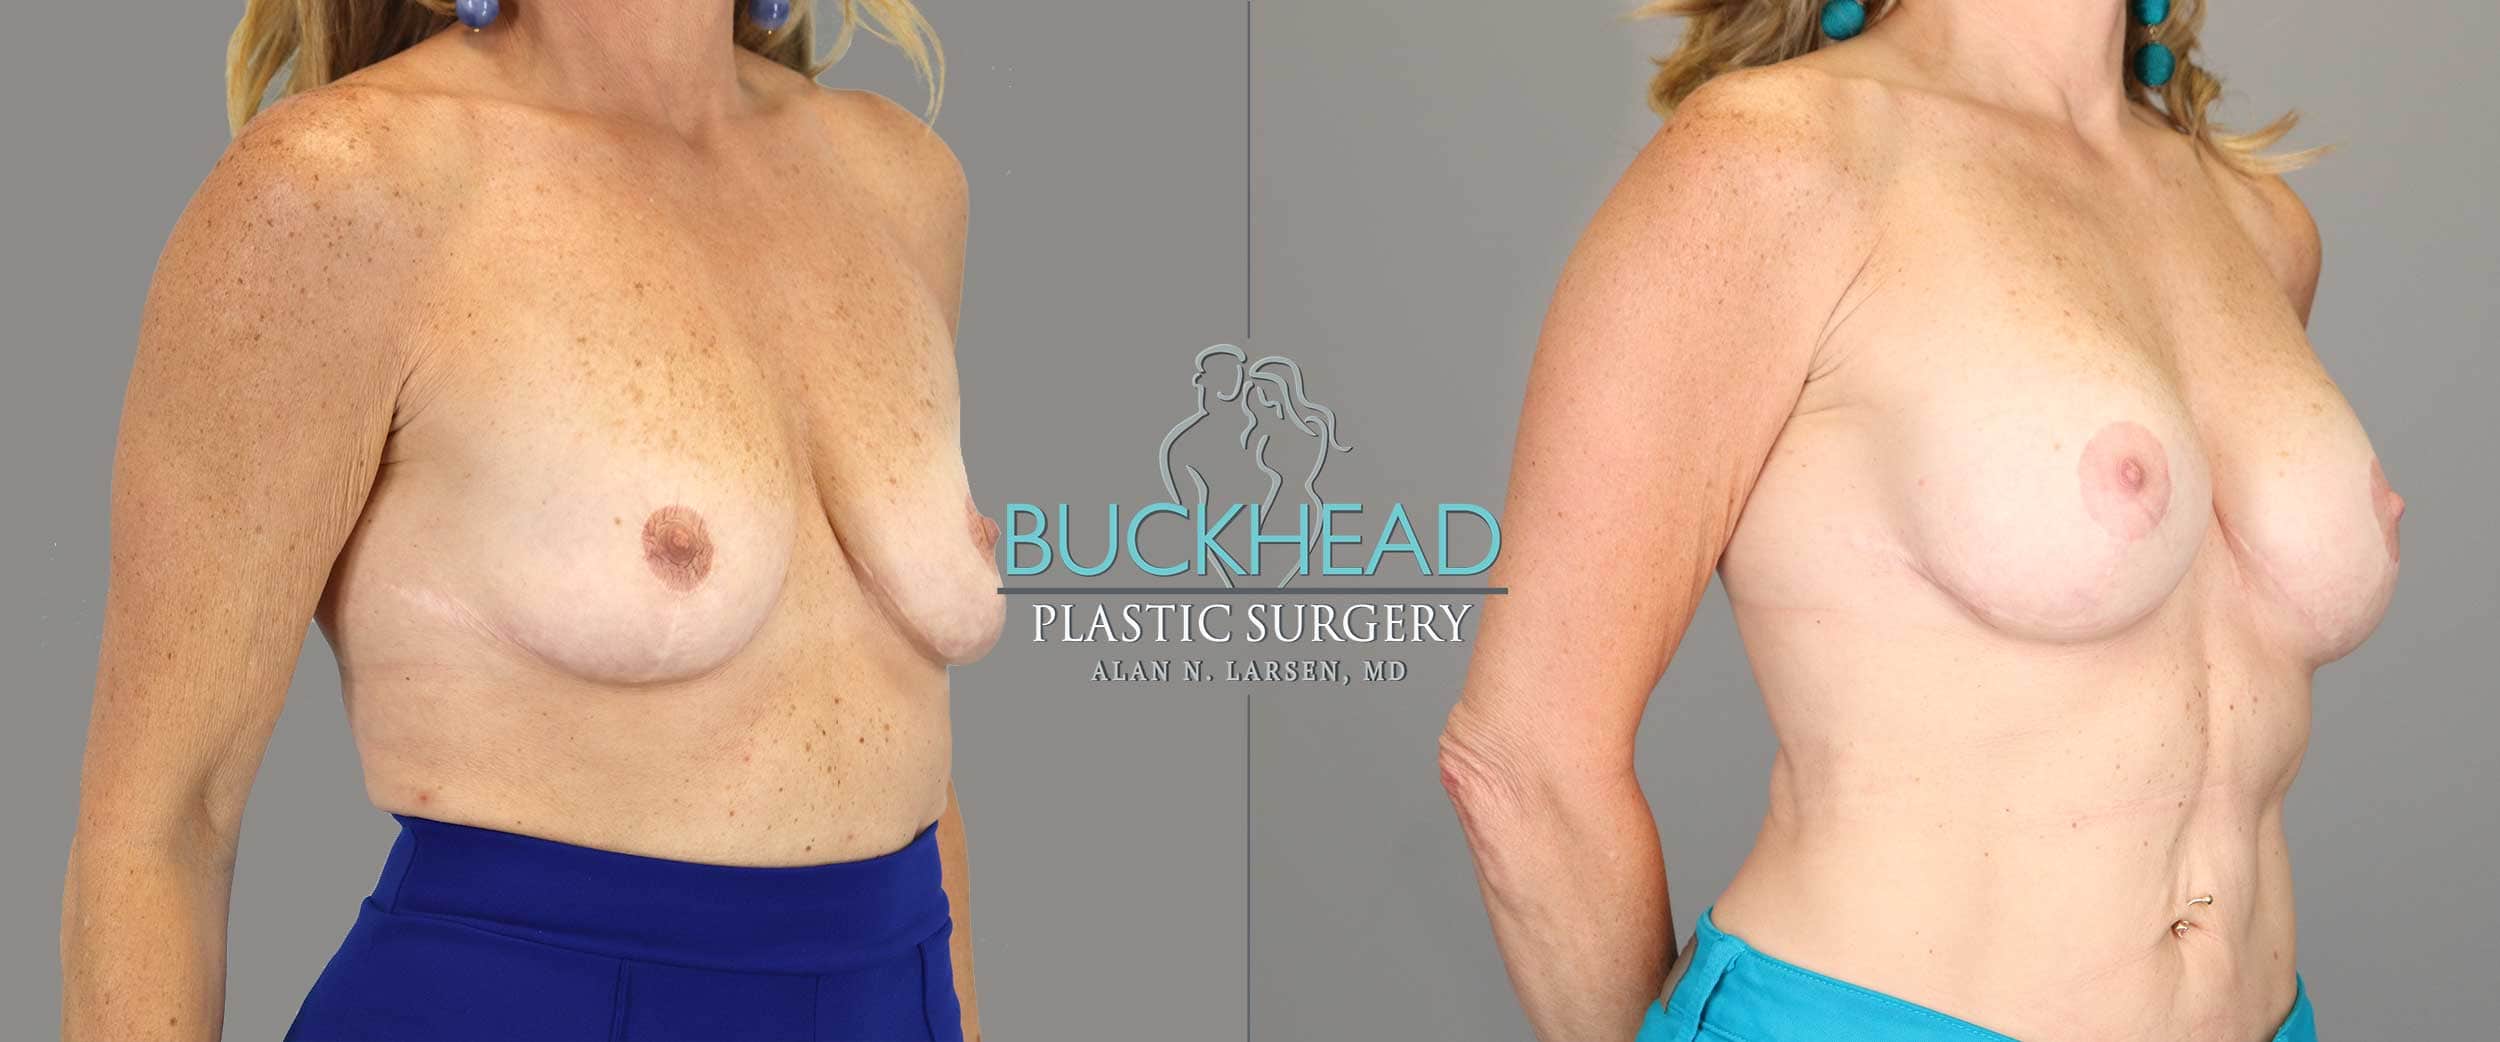 Before and After Photo Gallery | Breast Aug | Buckhead Plastic Surgery | Alan N. Larsen, MD | Board-Certified Plastic Surgeon | Atlanta GA